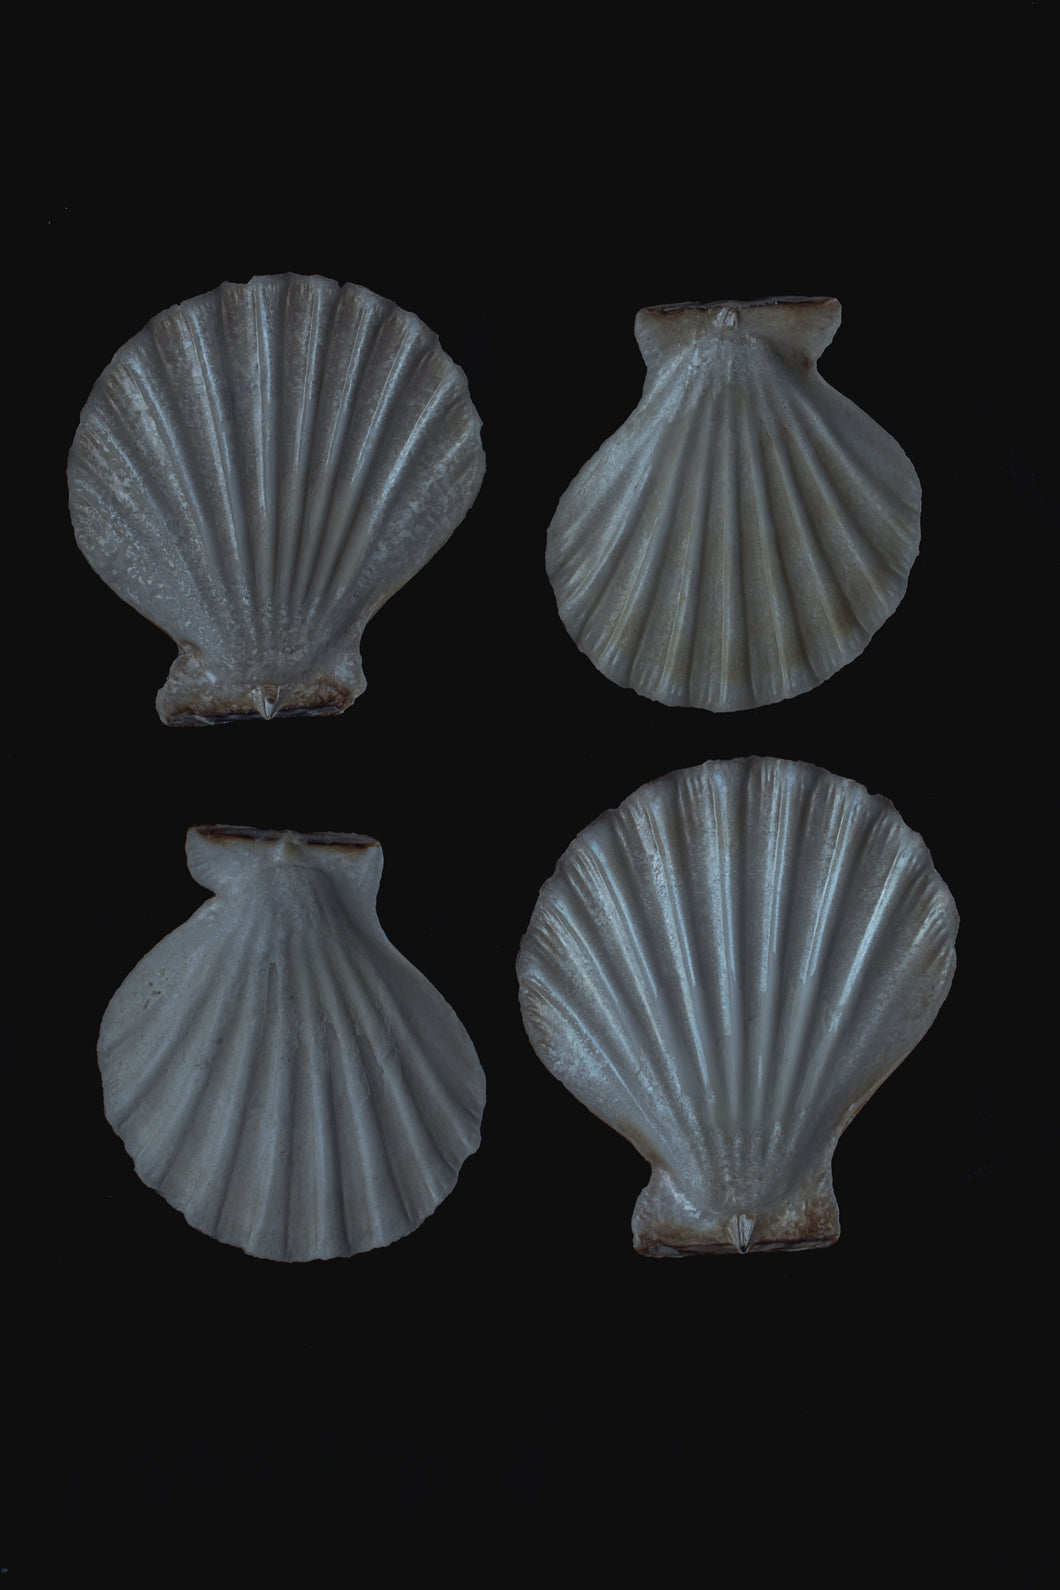 4 shells on black